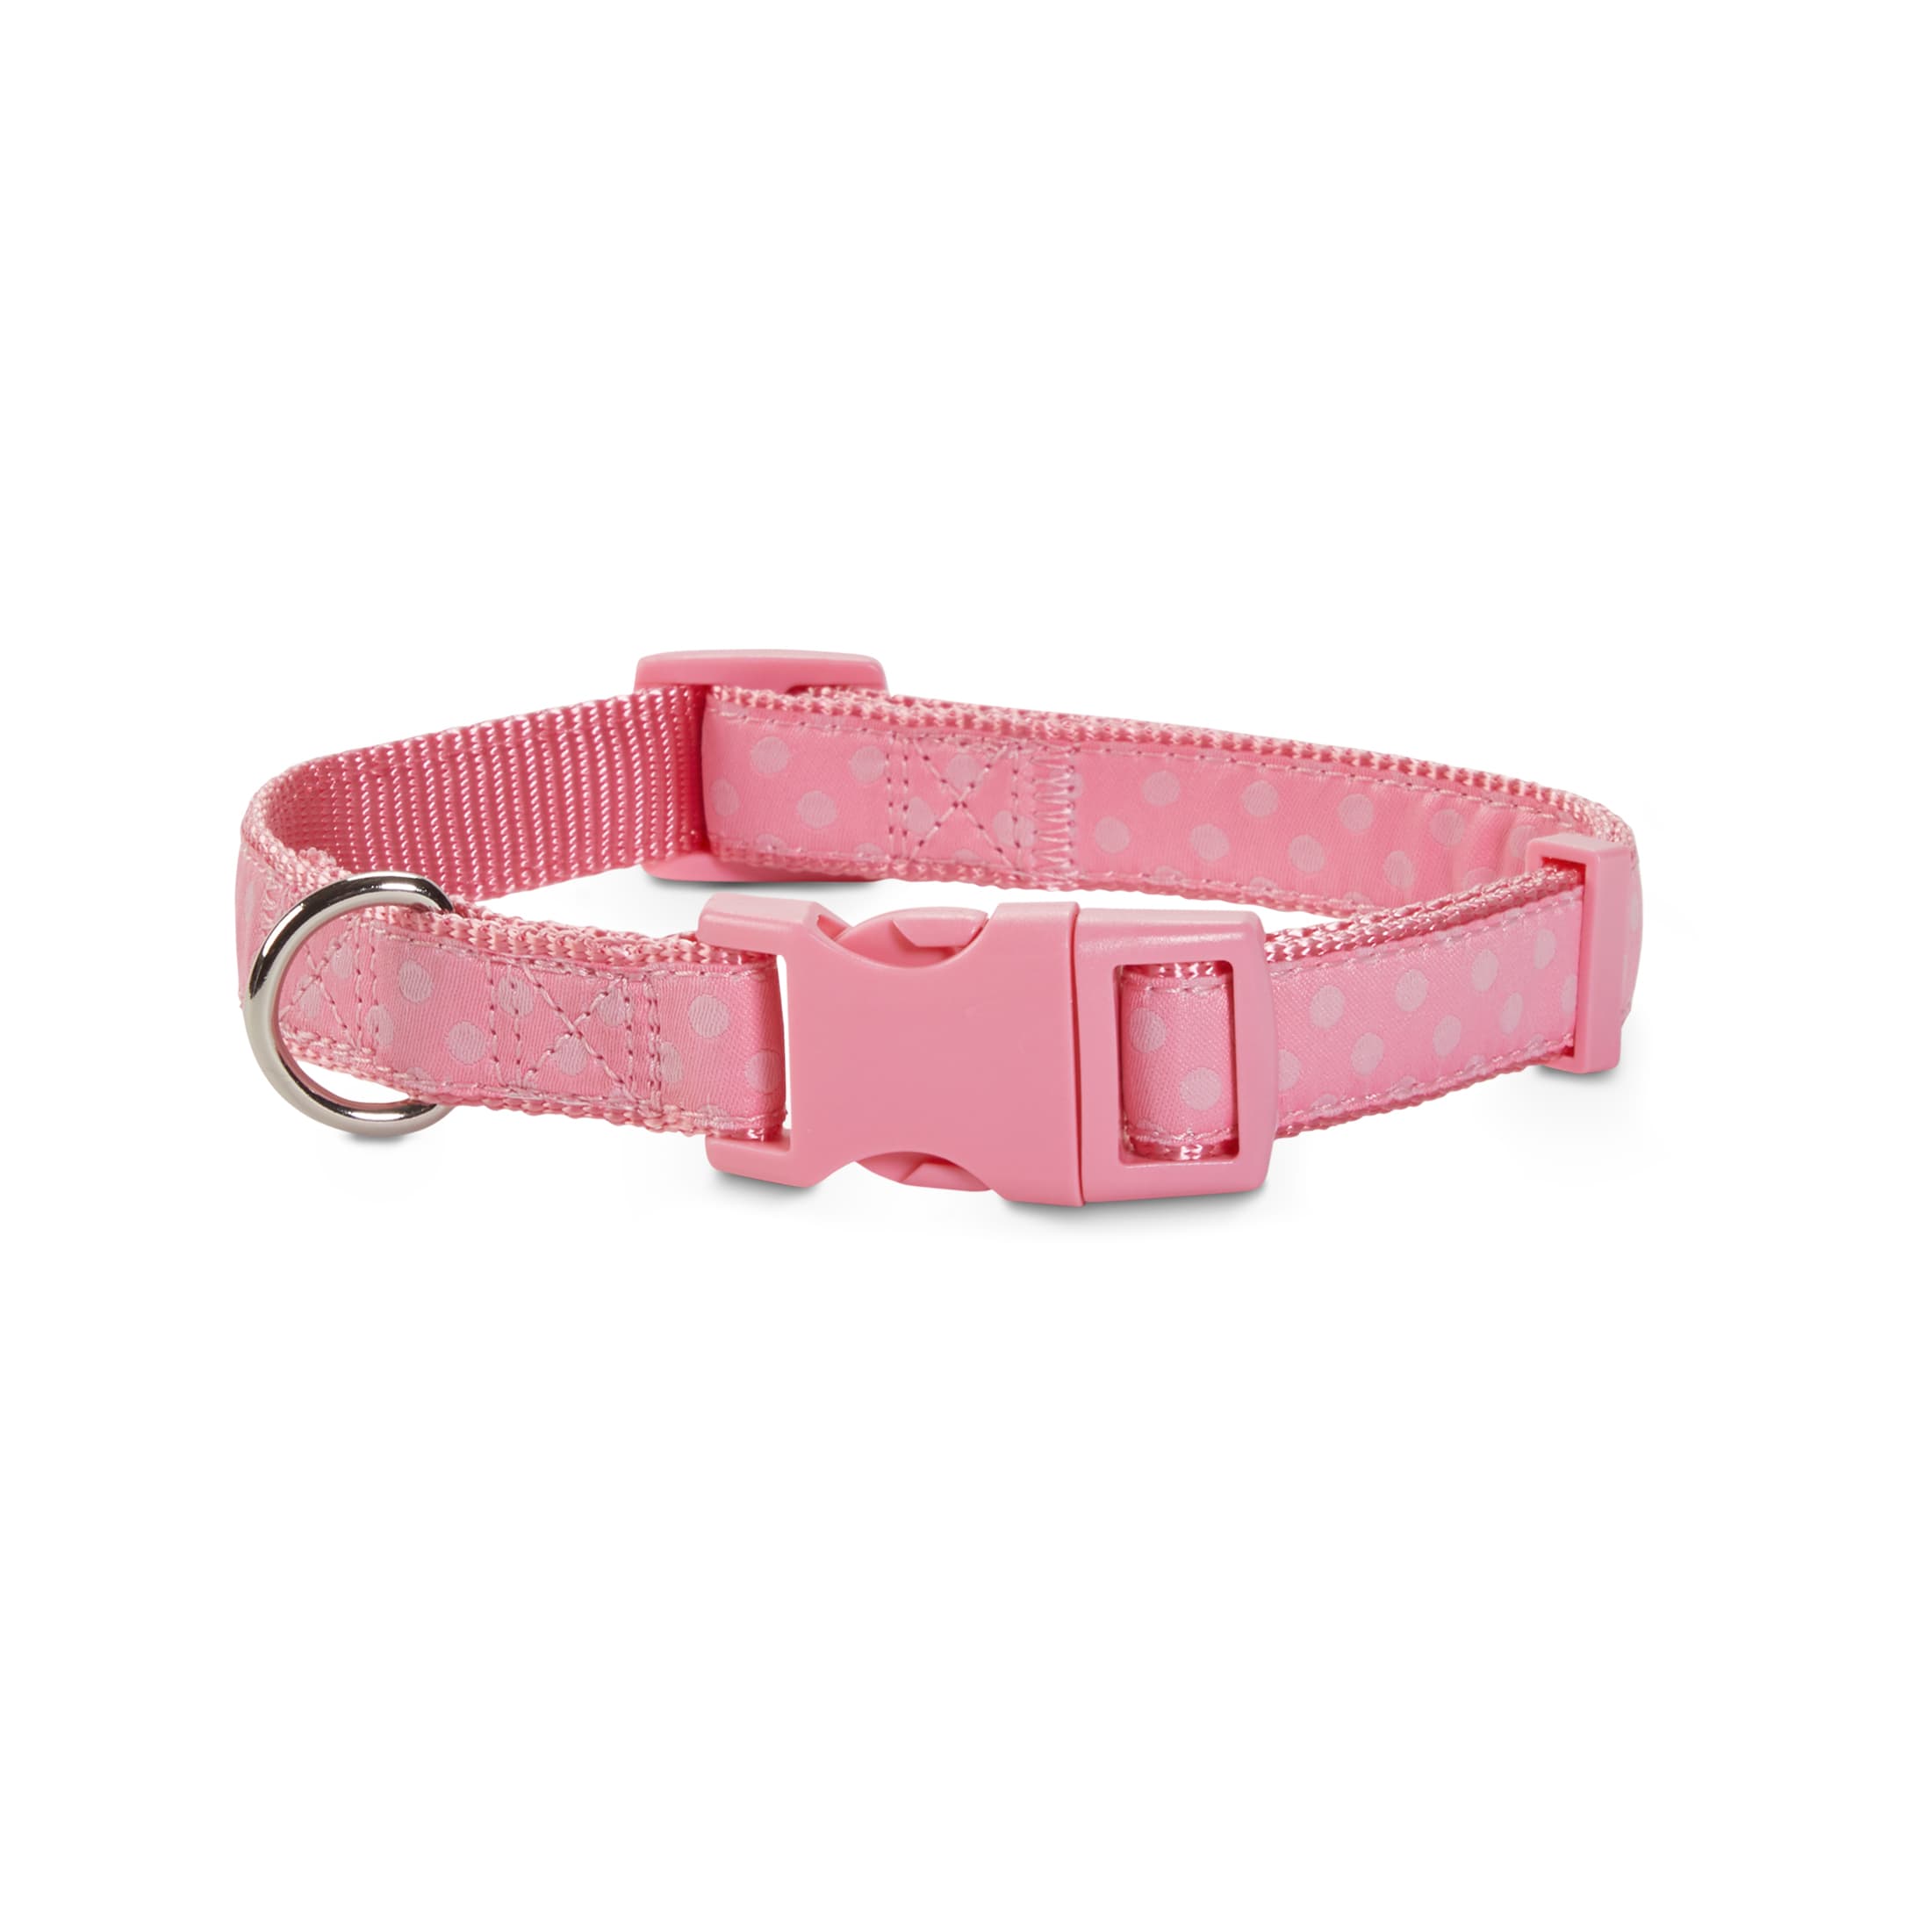 Blueberry Pet Essentials 2 Patterns Durable Pink Webbing Ladybug Designer  Dog Leash 4 ft x 1, Large, Basic Nylon Leashes for Dogs